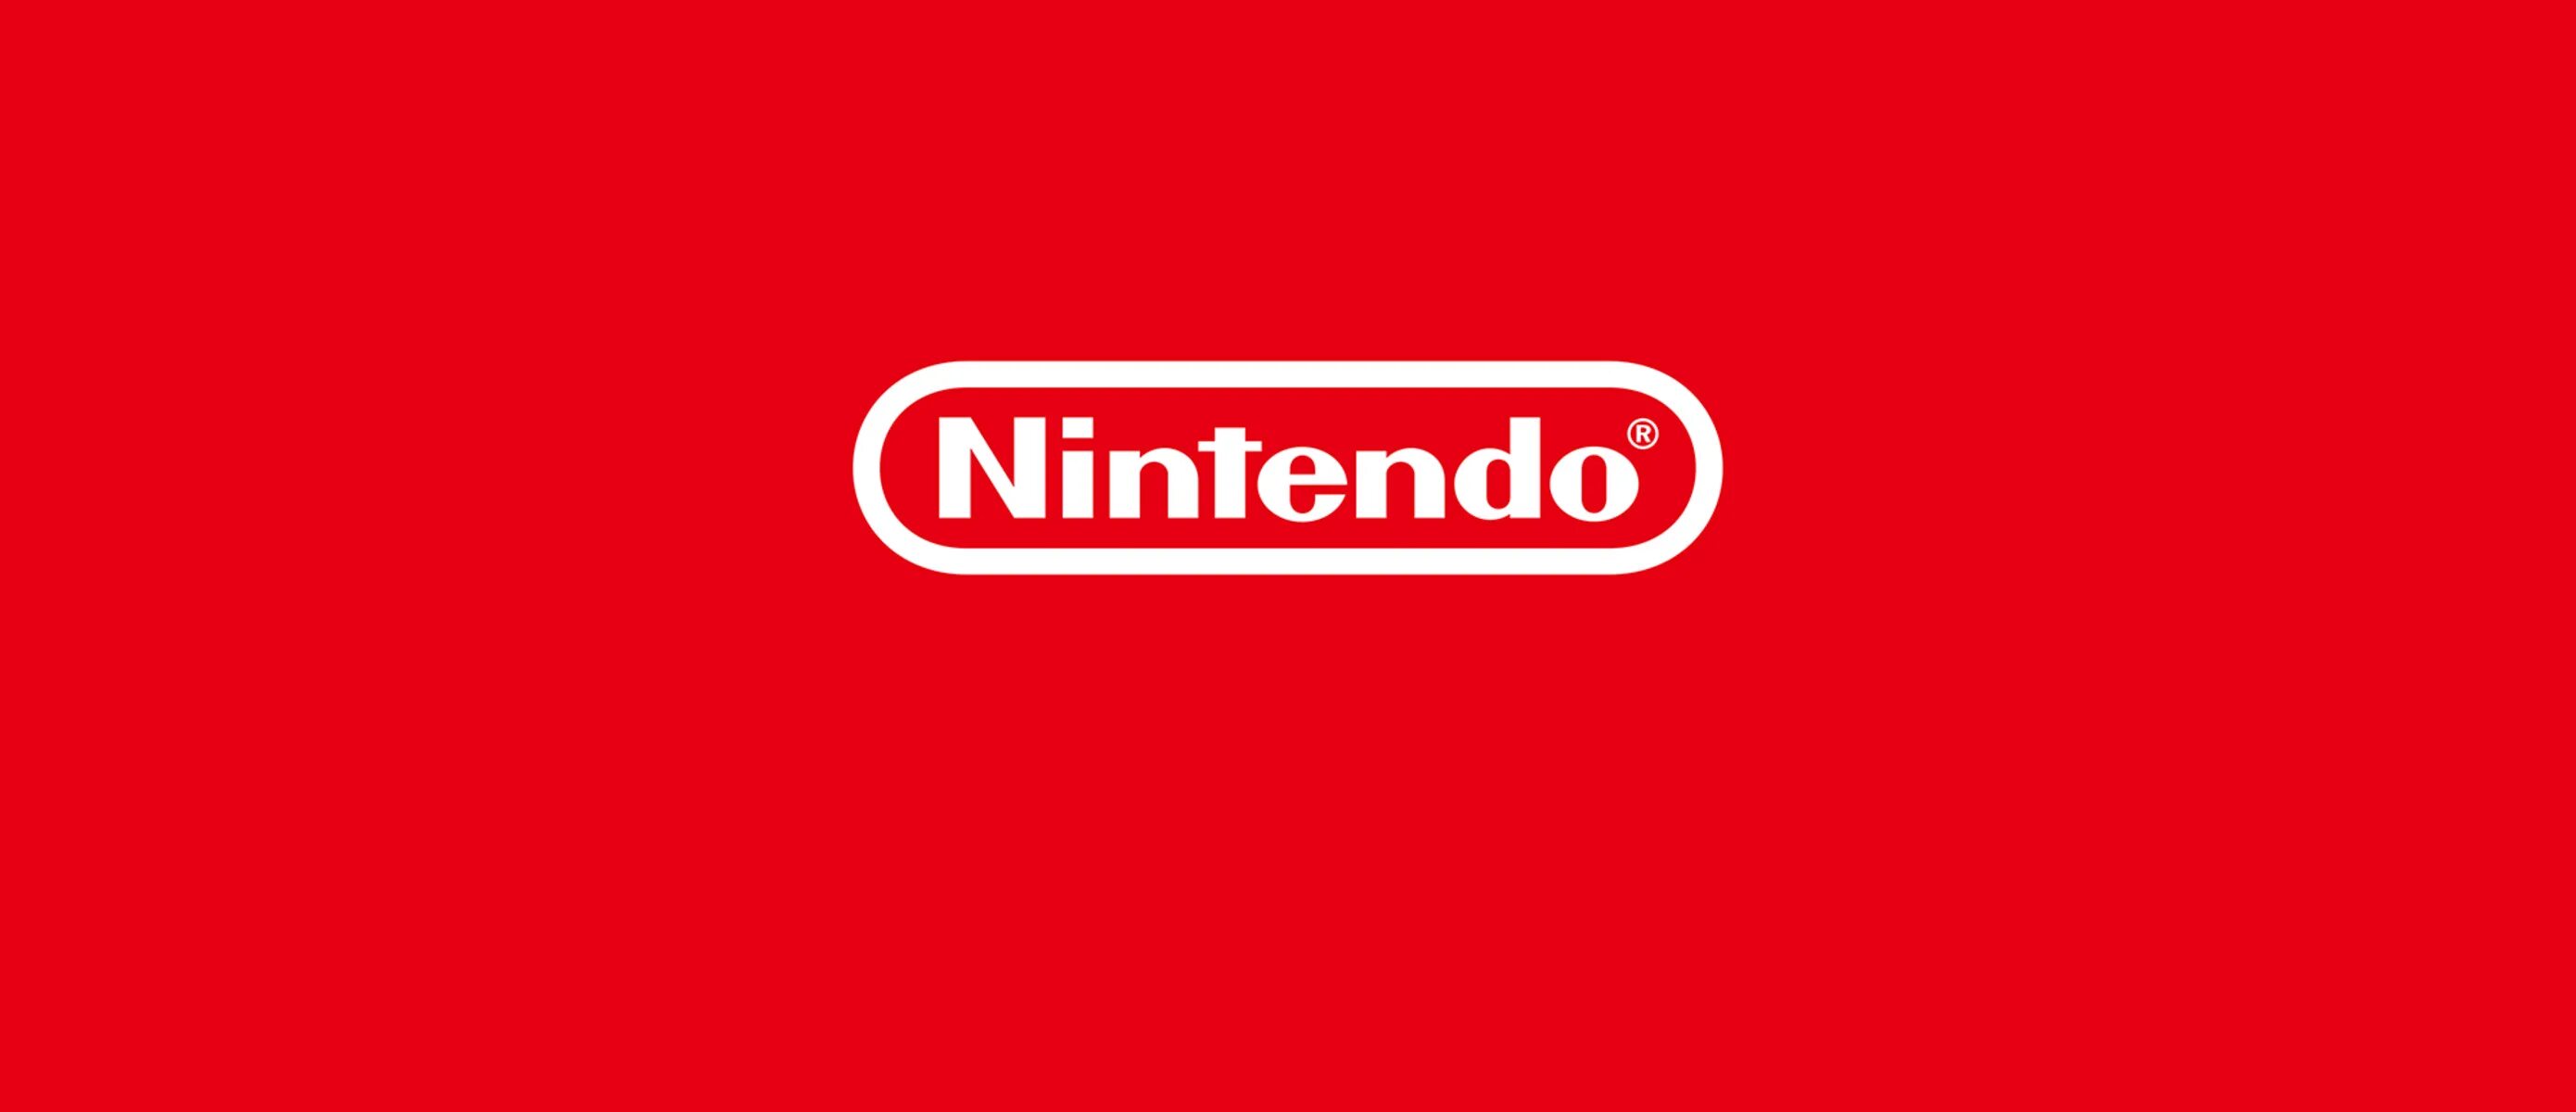 Нинтендо. Бренд Nintendo. Nintendo лого. Аккаунт Нинтендо.